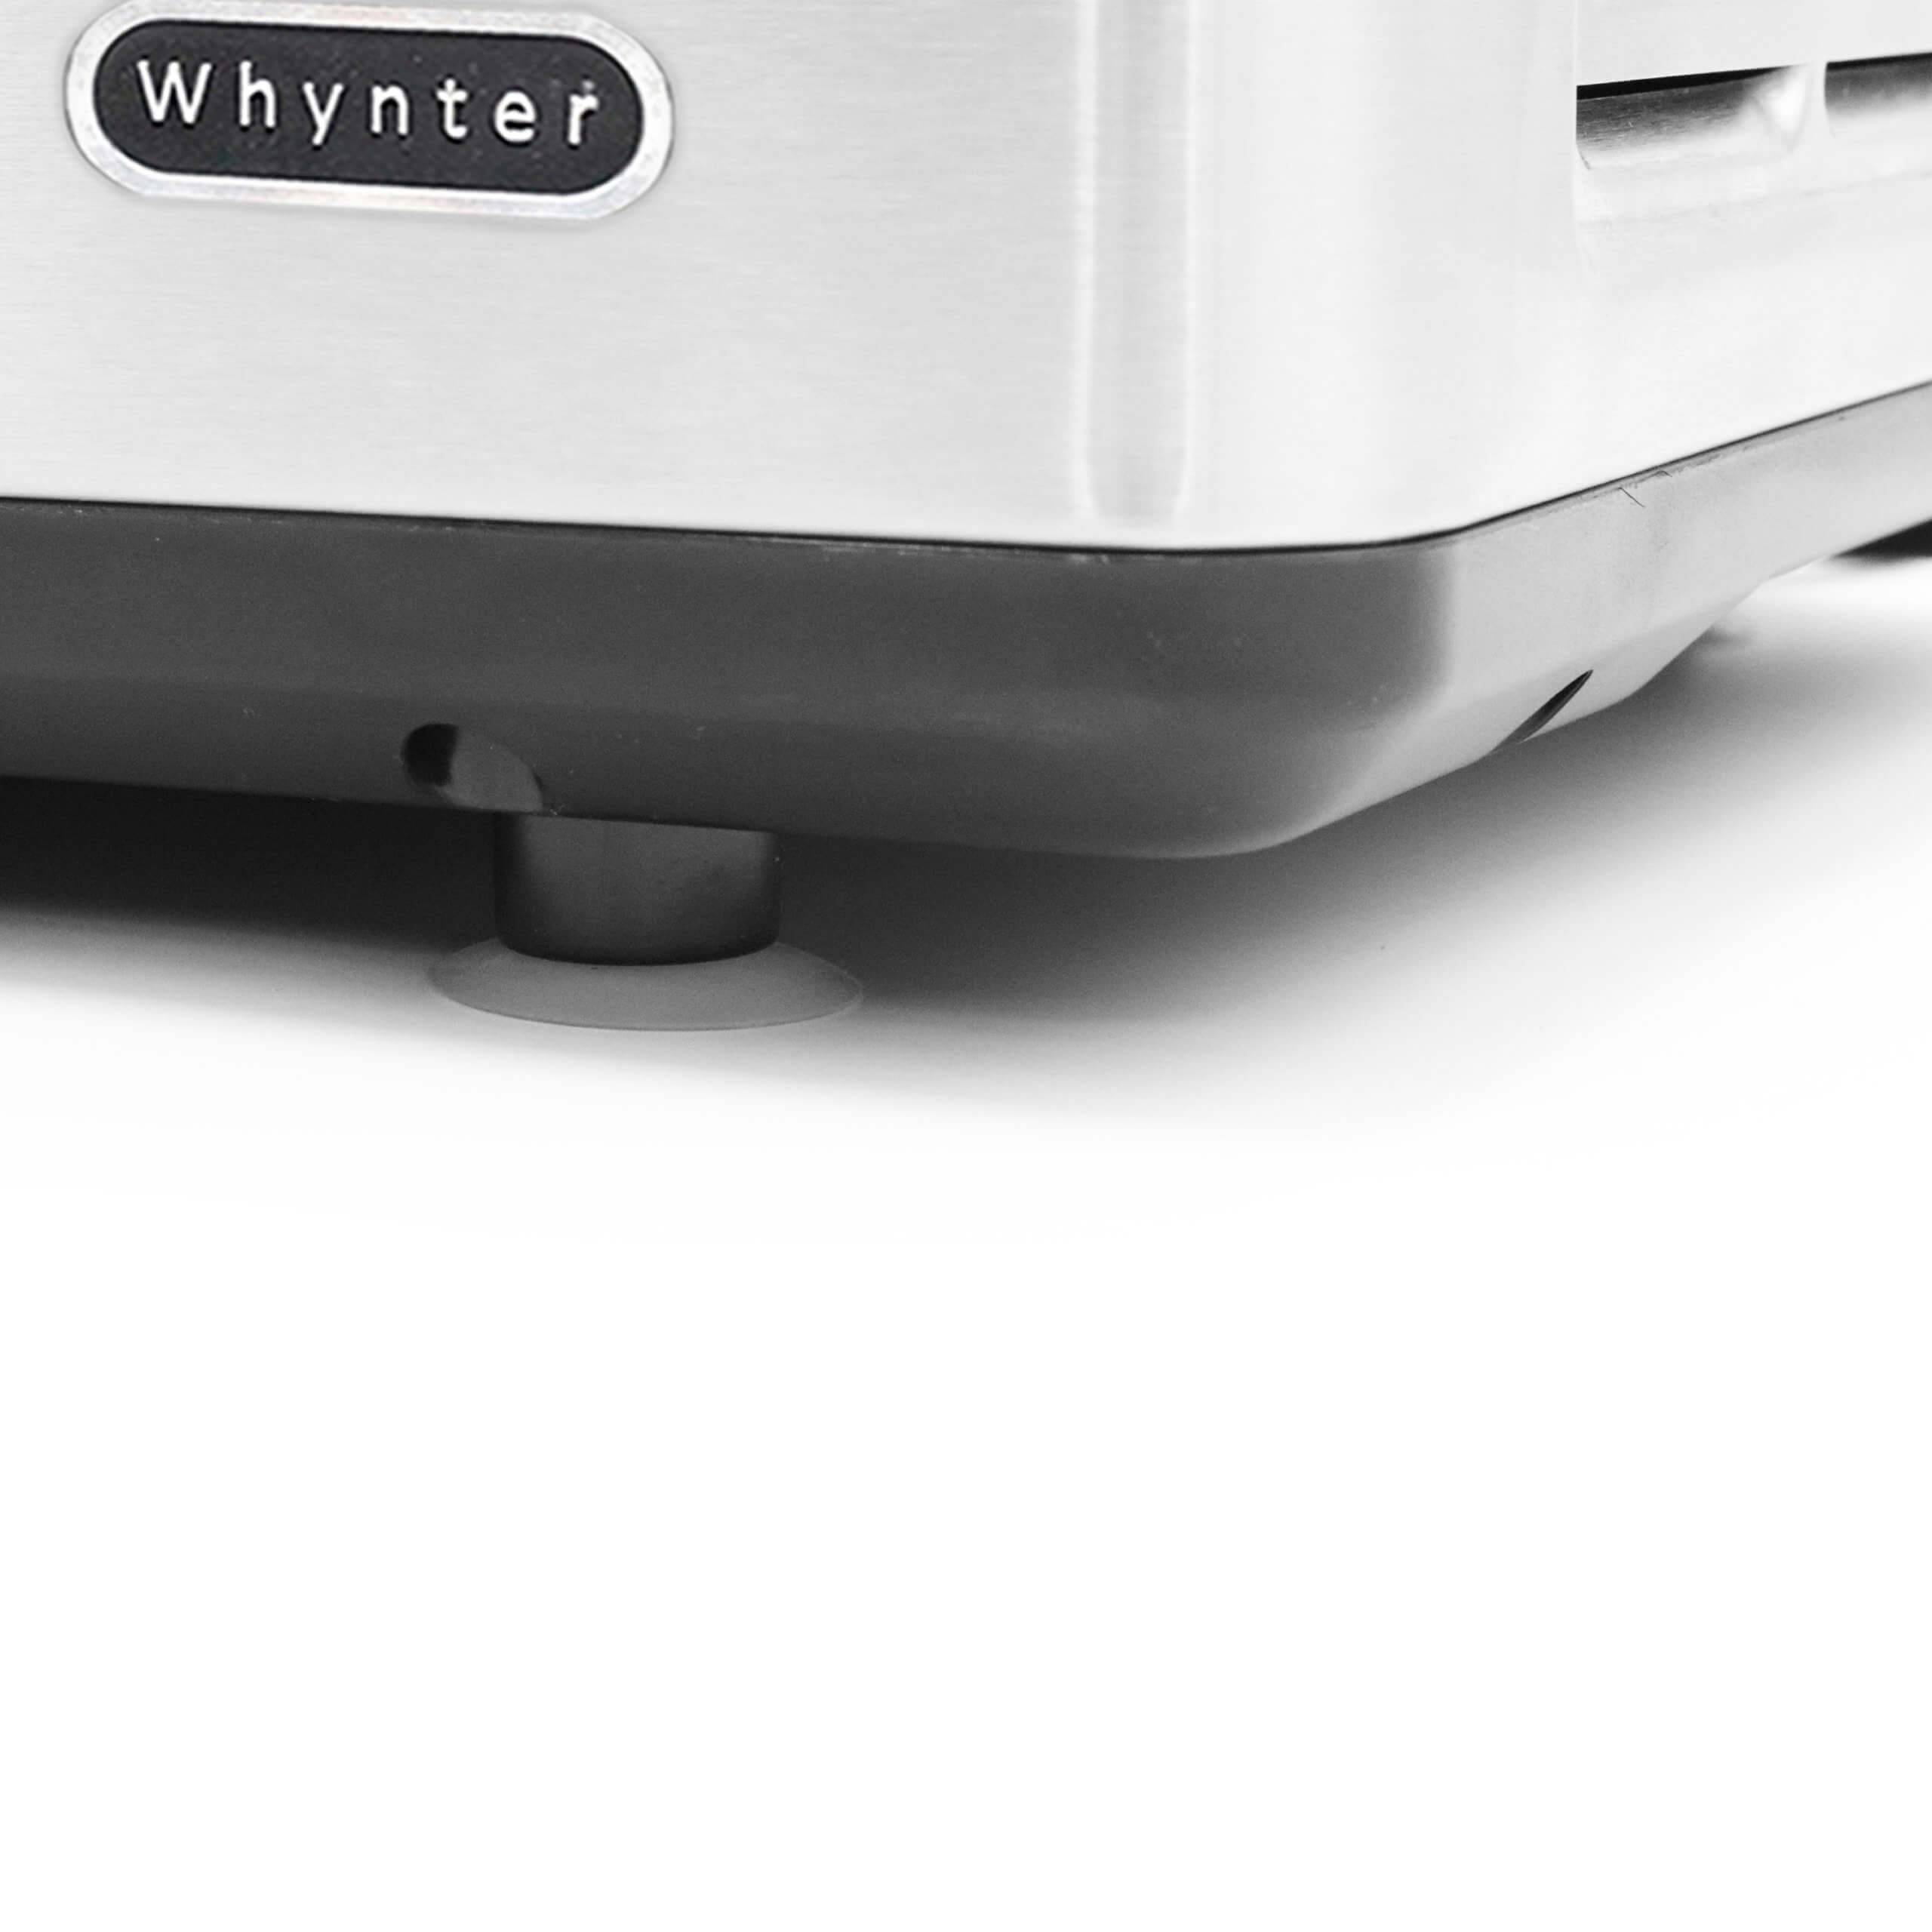 Whynter ICM-220CGY 2 Quart Capacity Automatic Compressor Ice